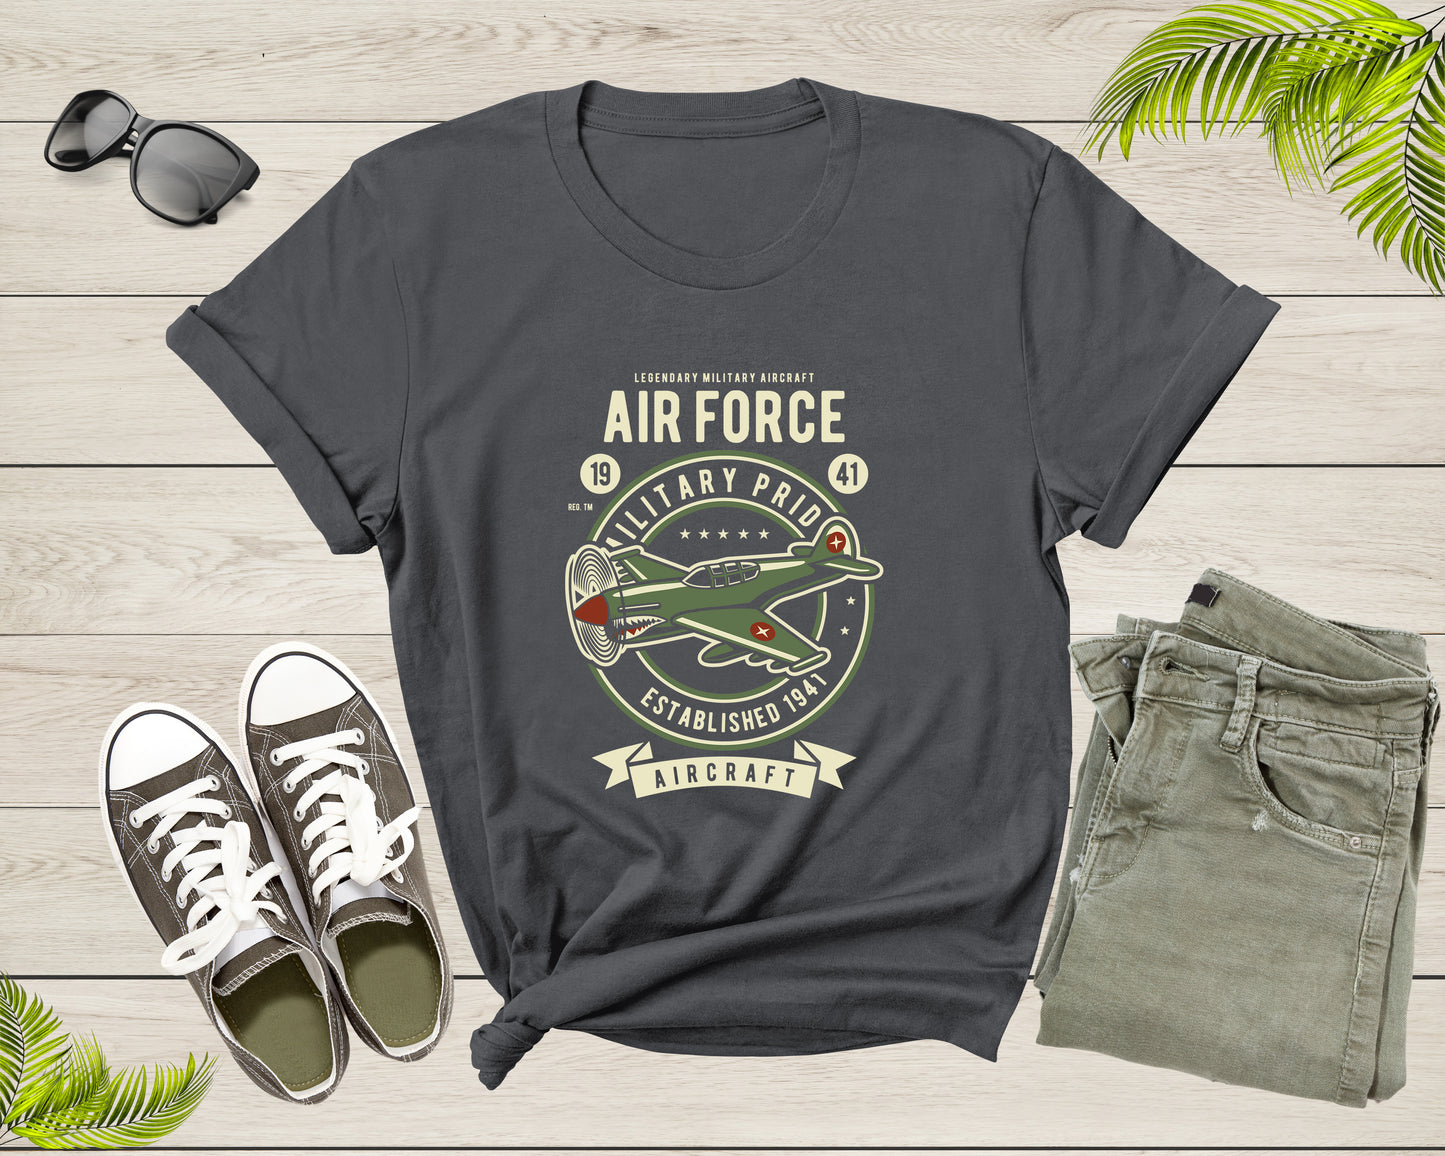 Legendary Military Aircraft Air Force Aviation Airplane Fly T-Shirt Airplane Lover Gift T Shirt for Men Women Kids Boys Girls Tshirt